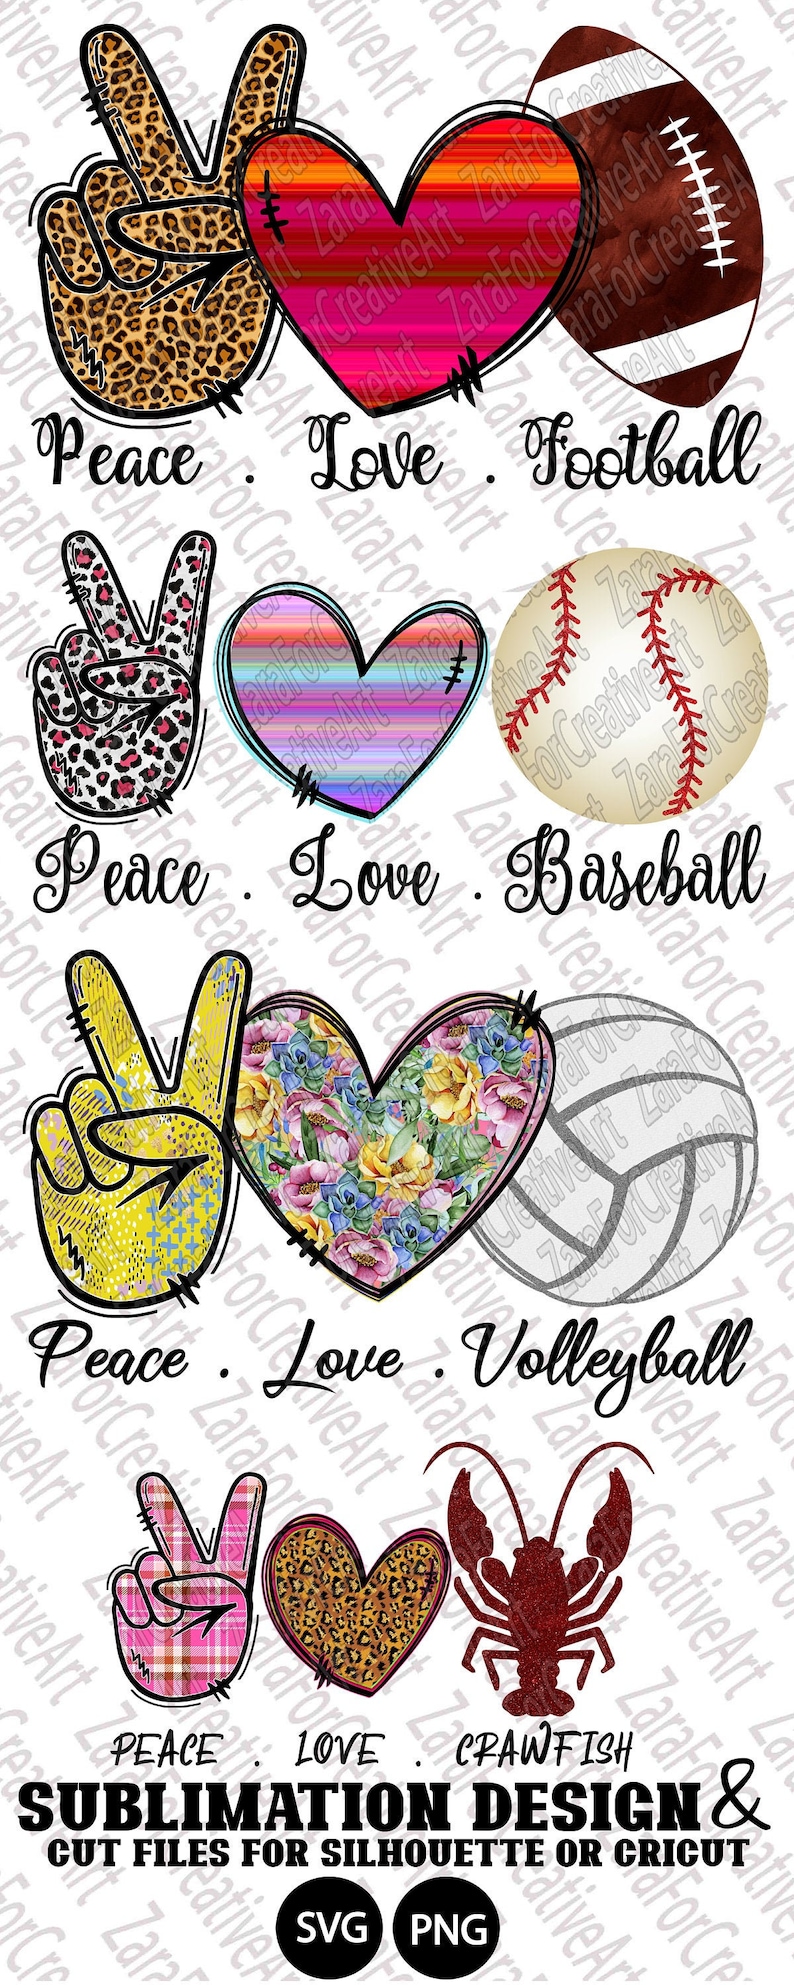 Download 39 design PNG SVG sublimation Peace Love Football sunshine | Etsy